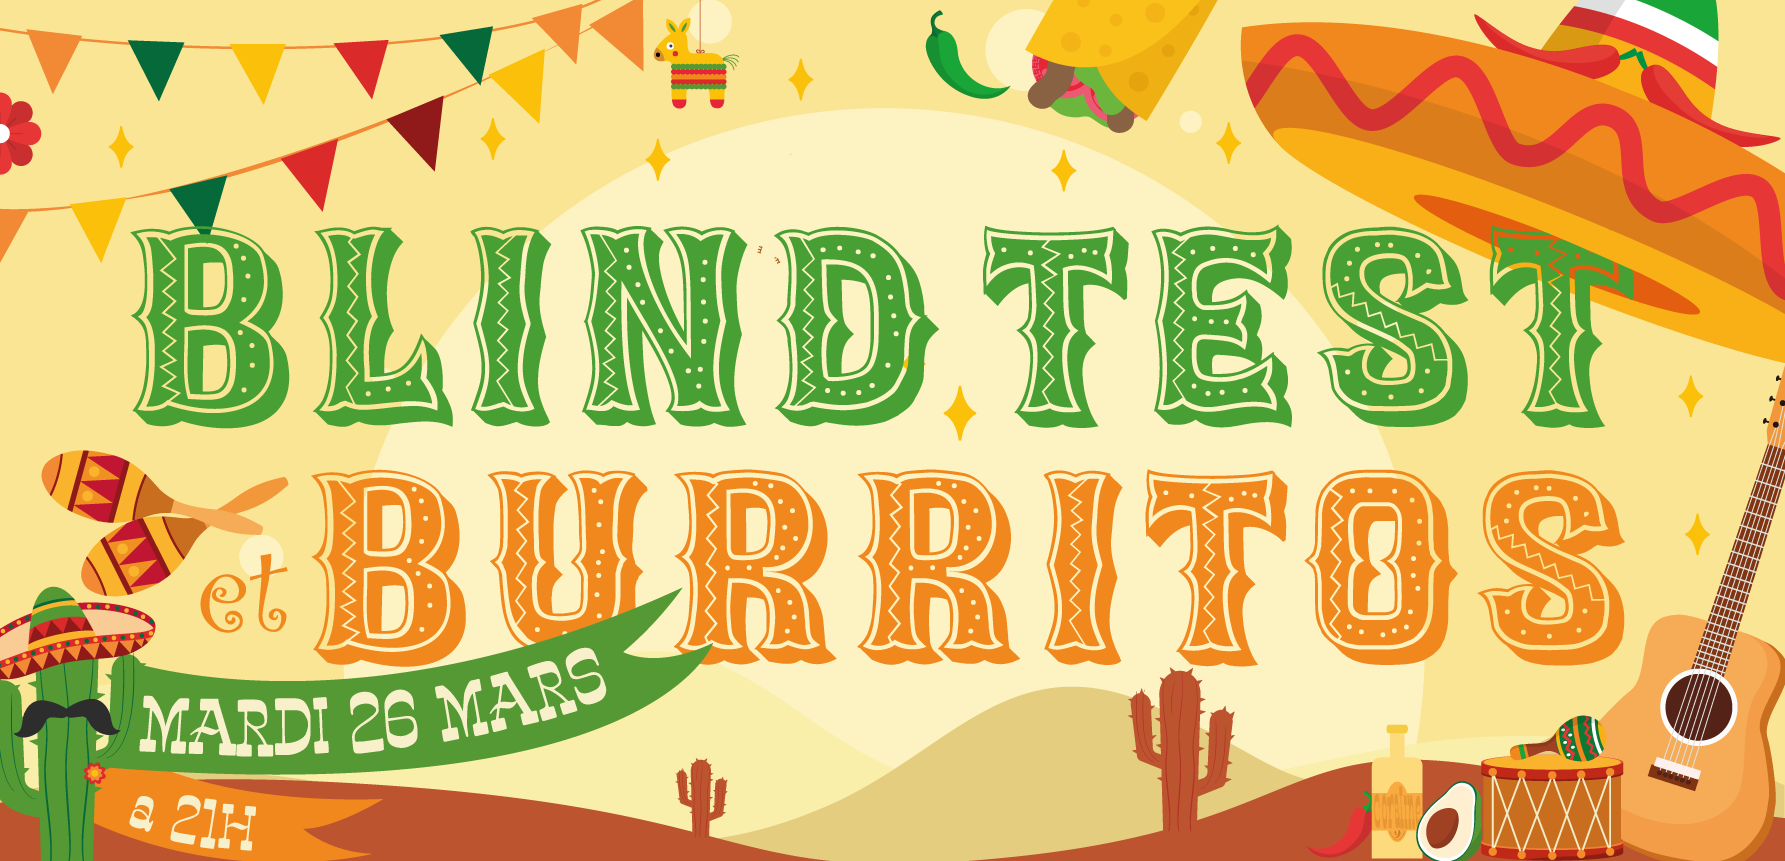 Blind test et burritos le mardi 26 mars 2024 à 21h